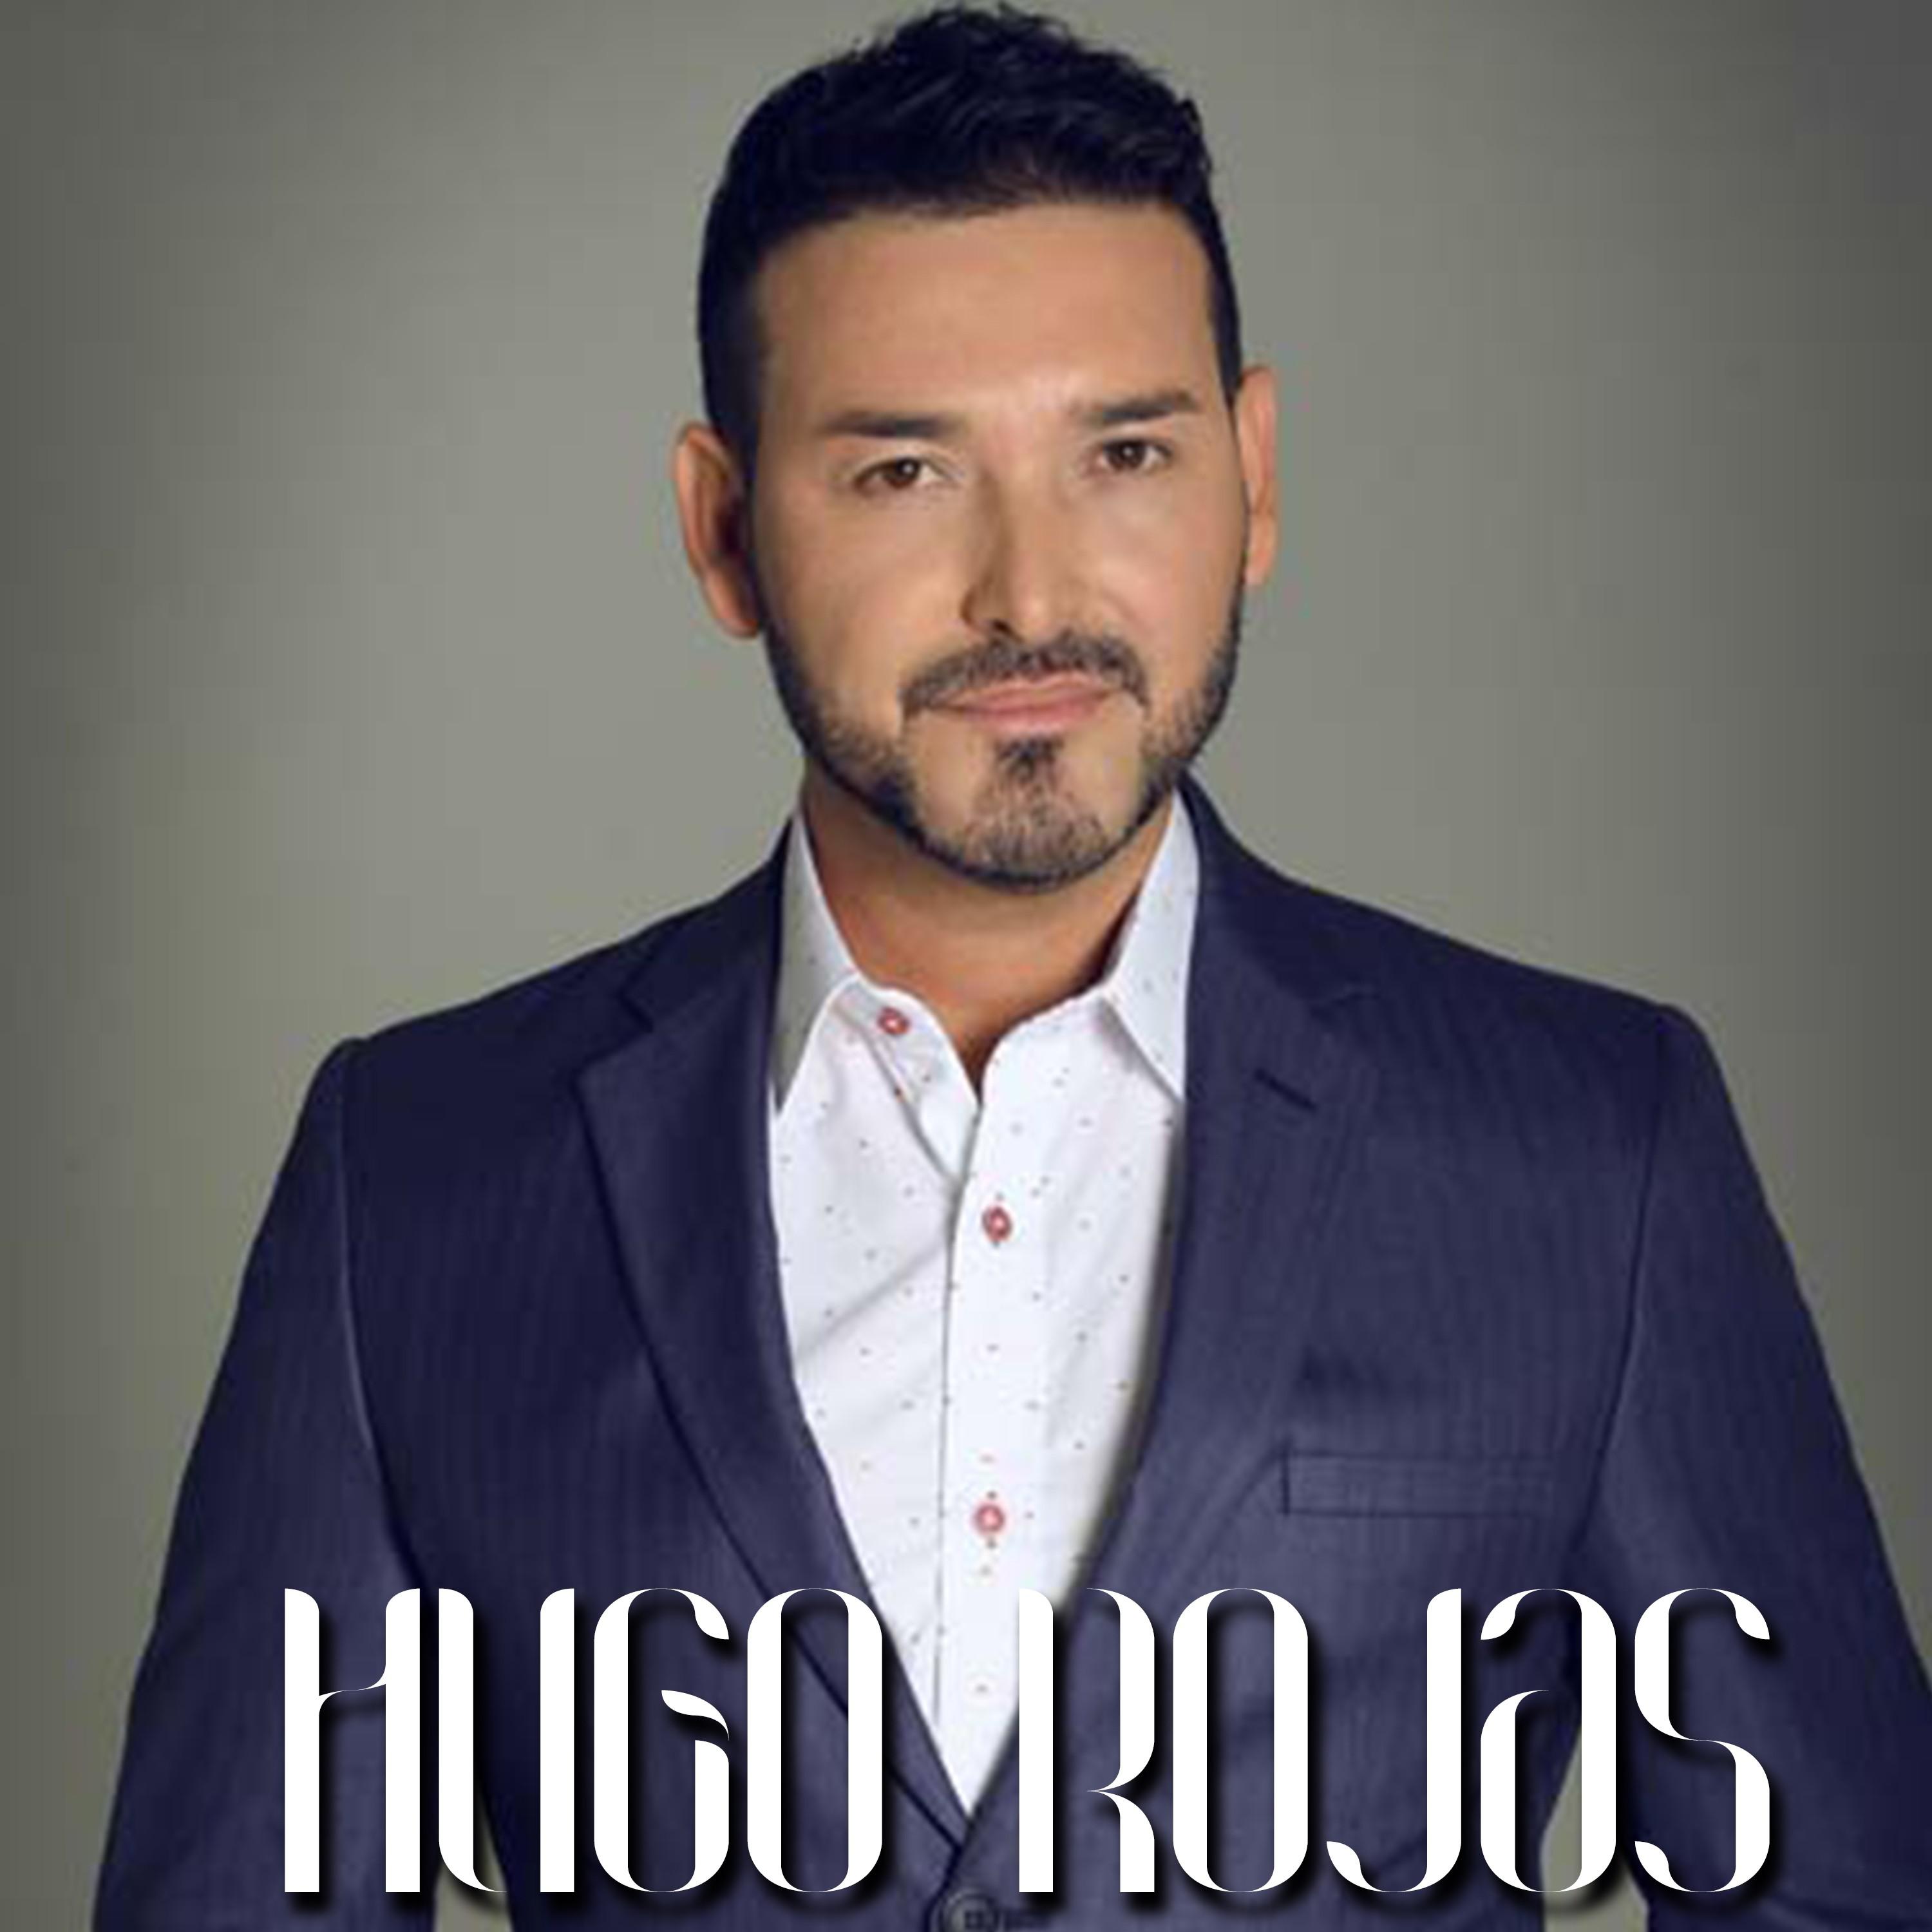 Hugo Rojas